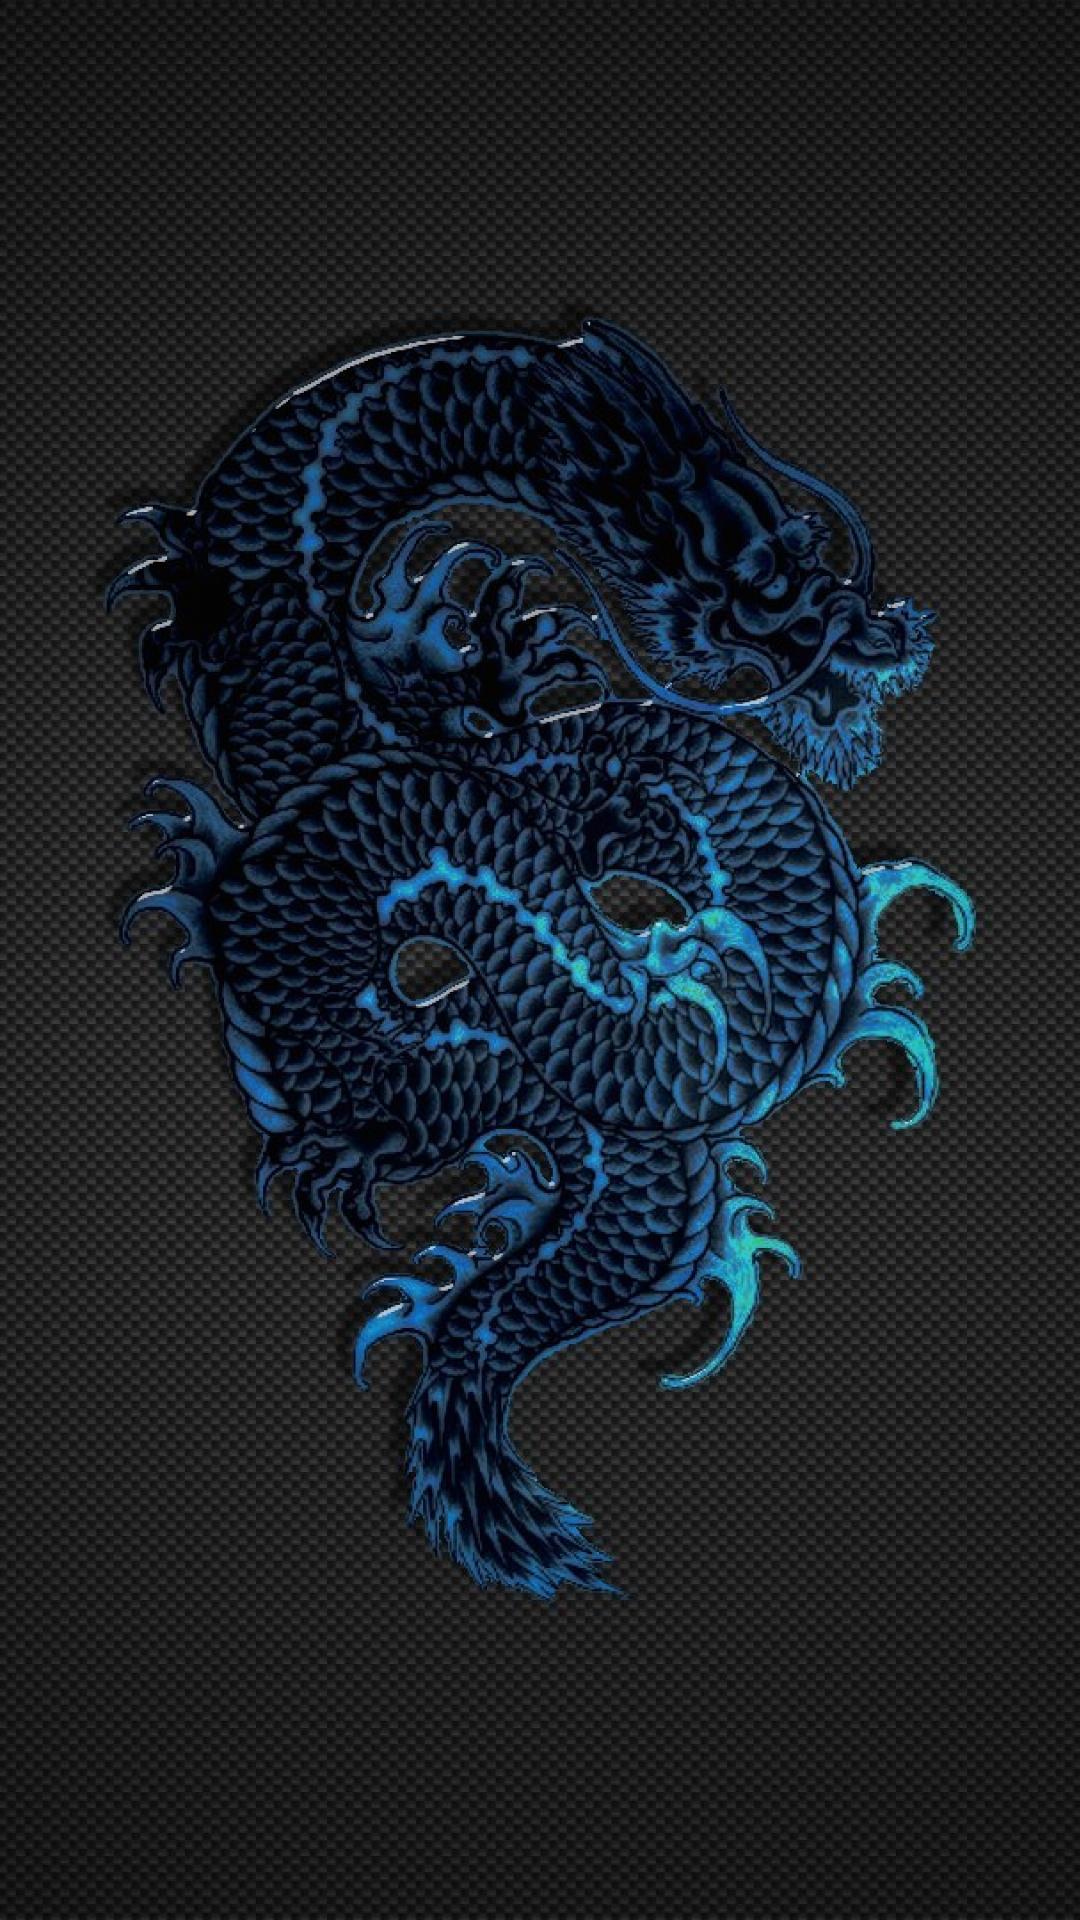 Black Dragon iPhone Wallpapers - Top Free Black Dragon iPhone ...